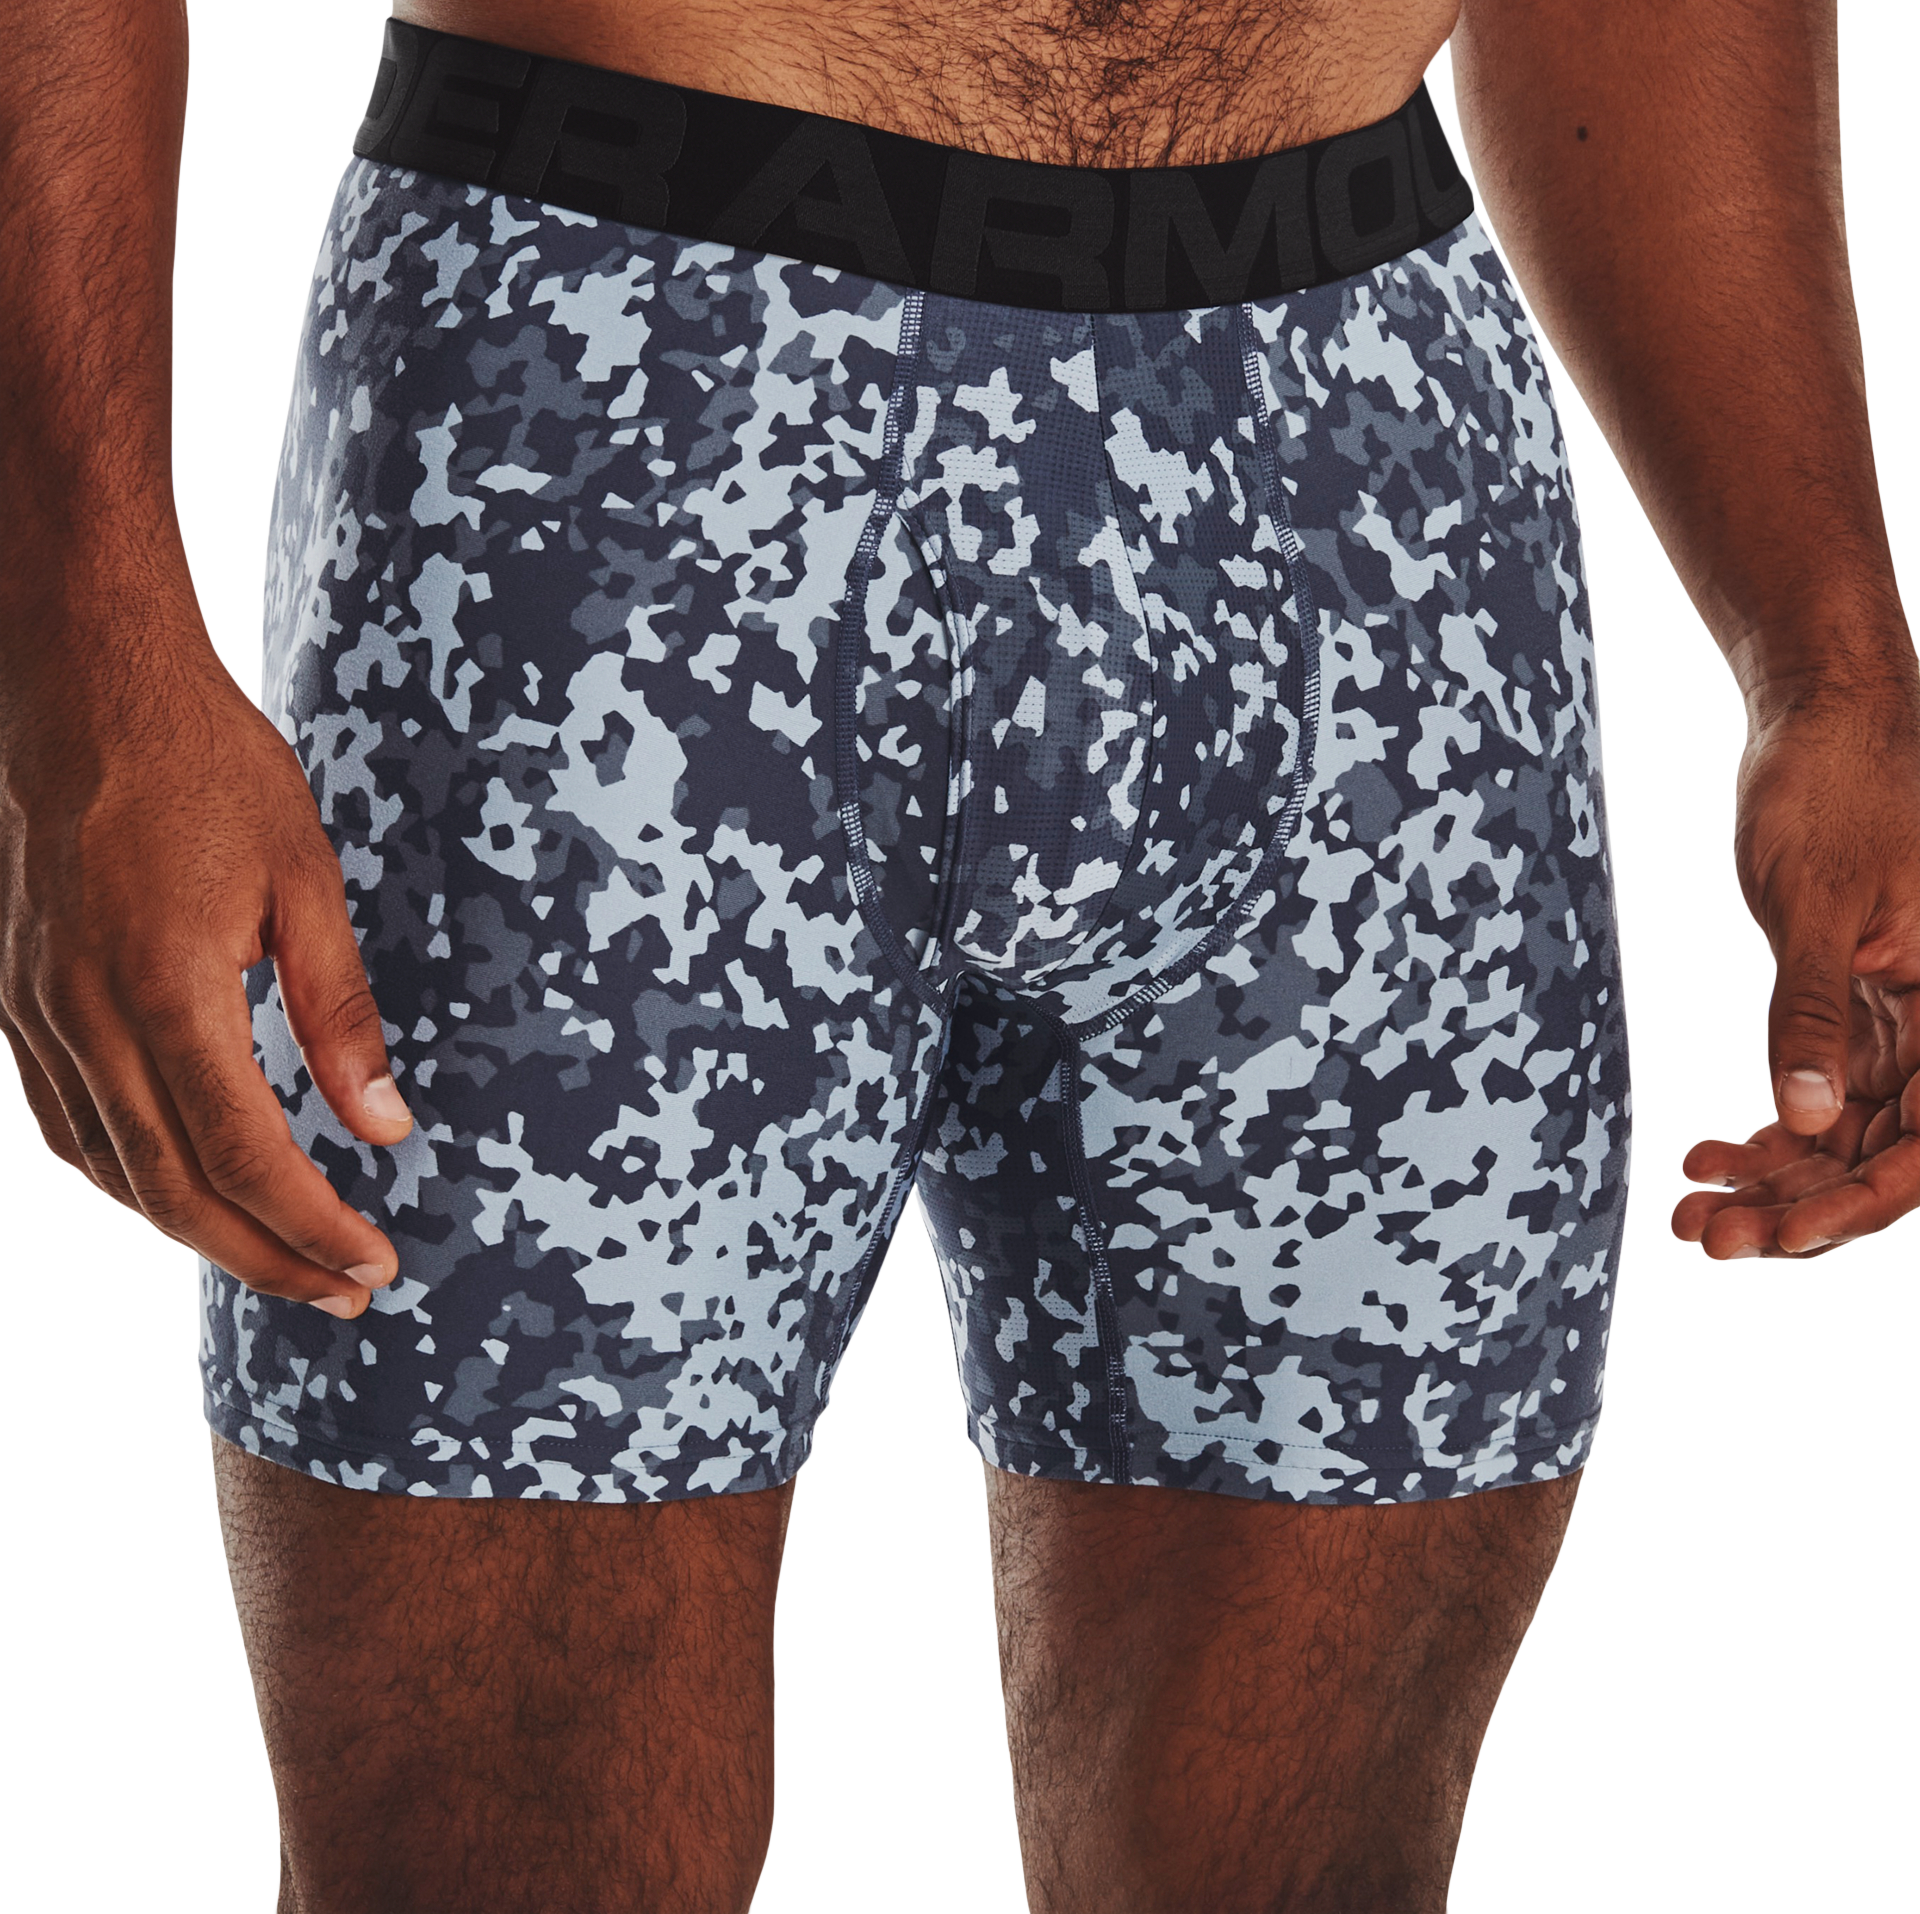 Under Armour Tech 6"" Patterned Boxerjock Shorts for Men - Harbor Blue/Jet Gray - L